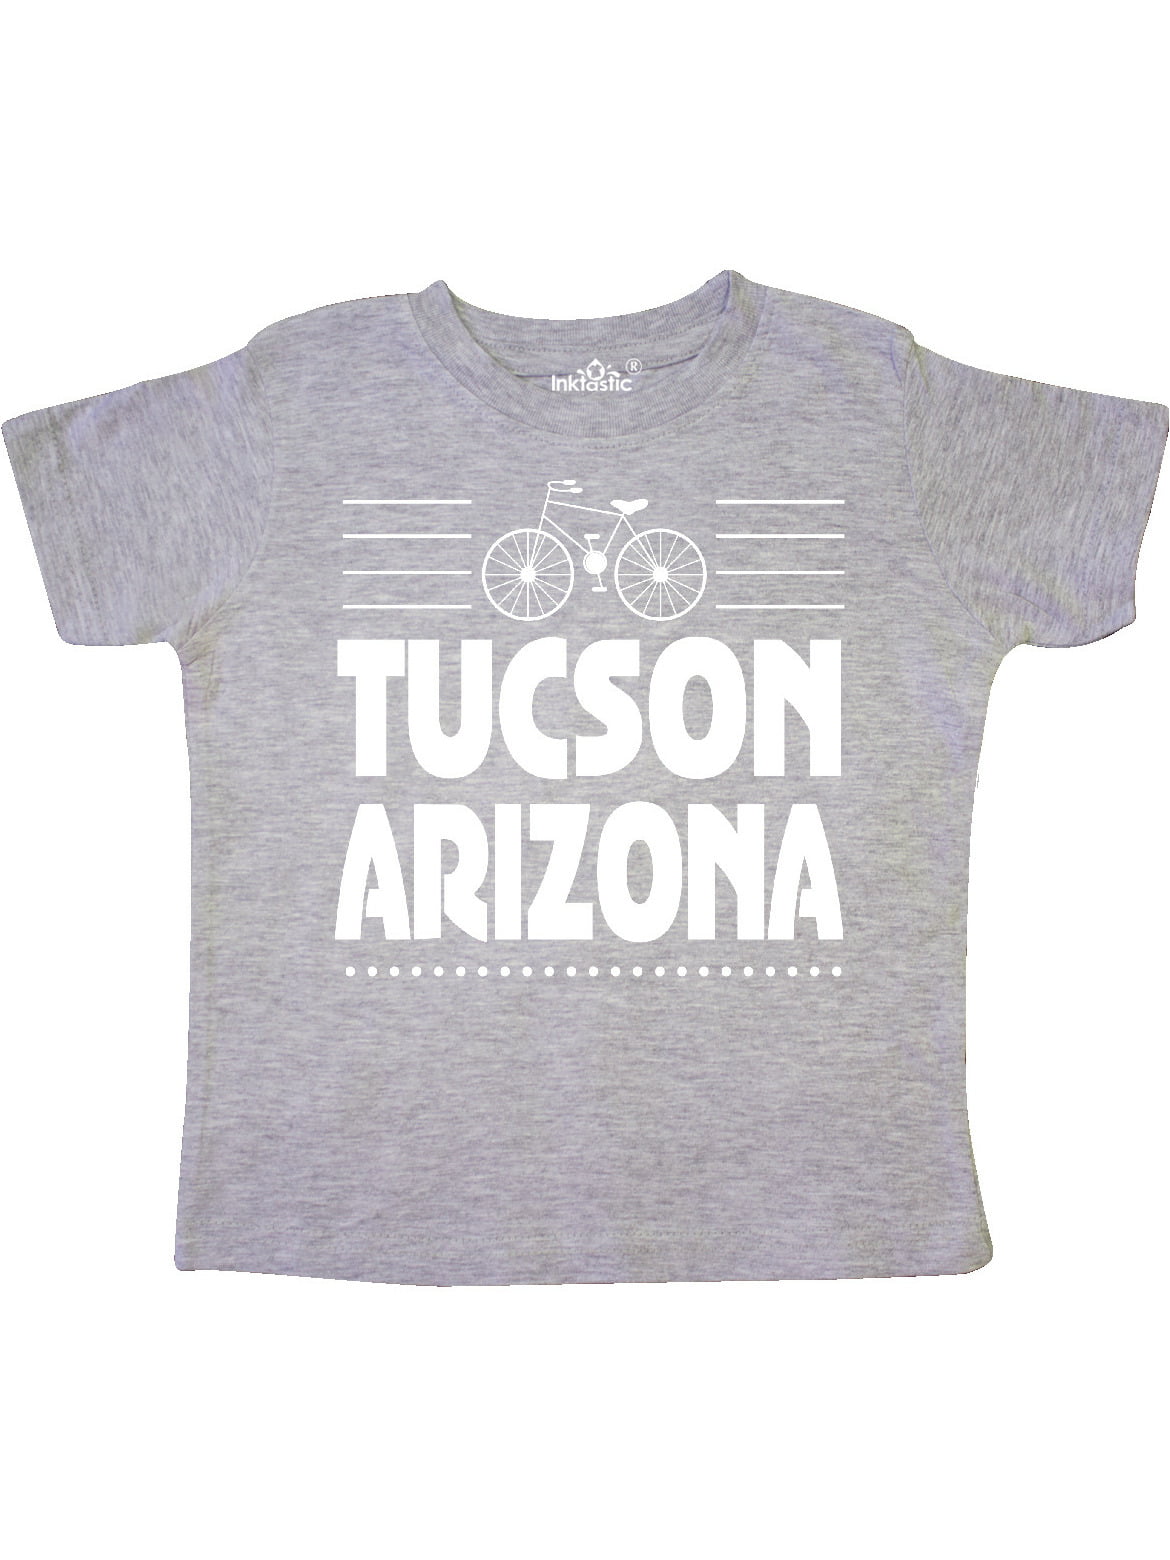 Tucson Arizona Heavy Cotton Toddler Kids T-Shirt Tee